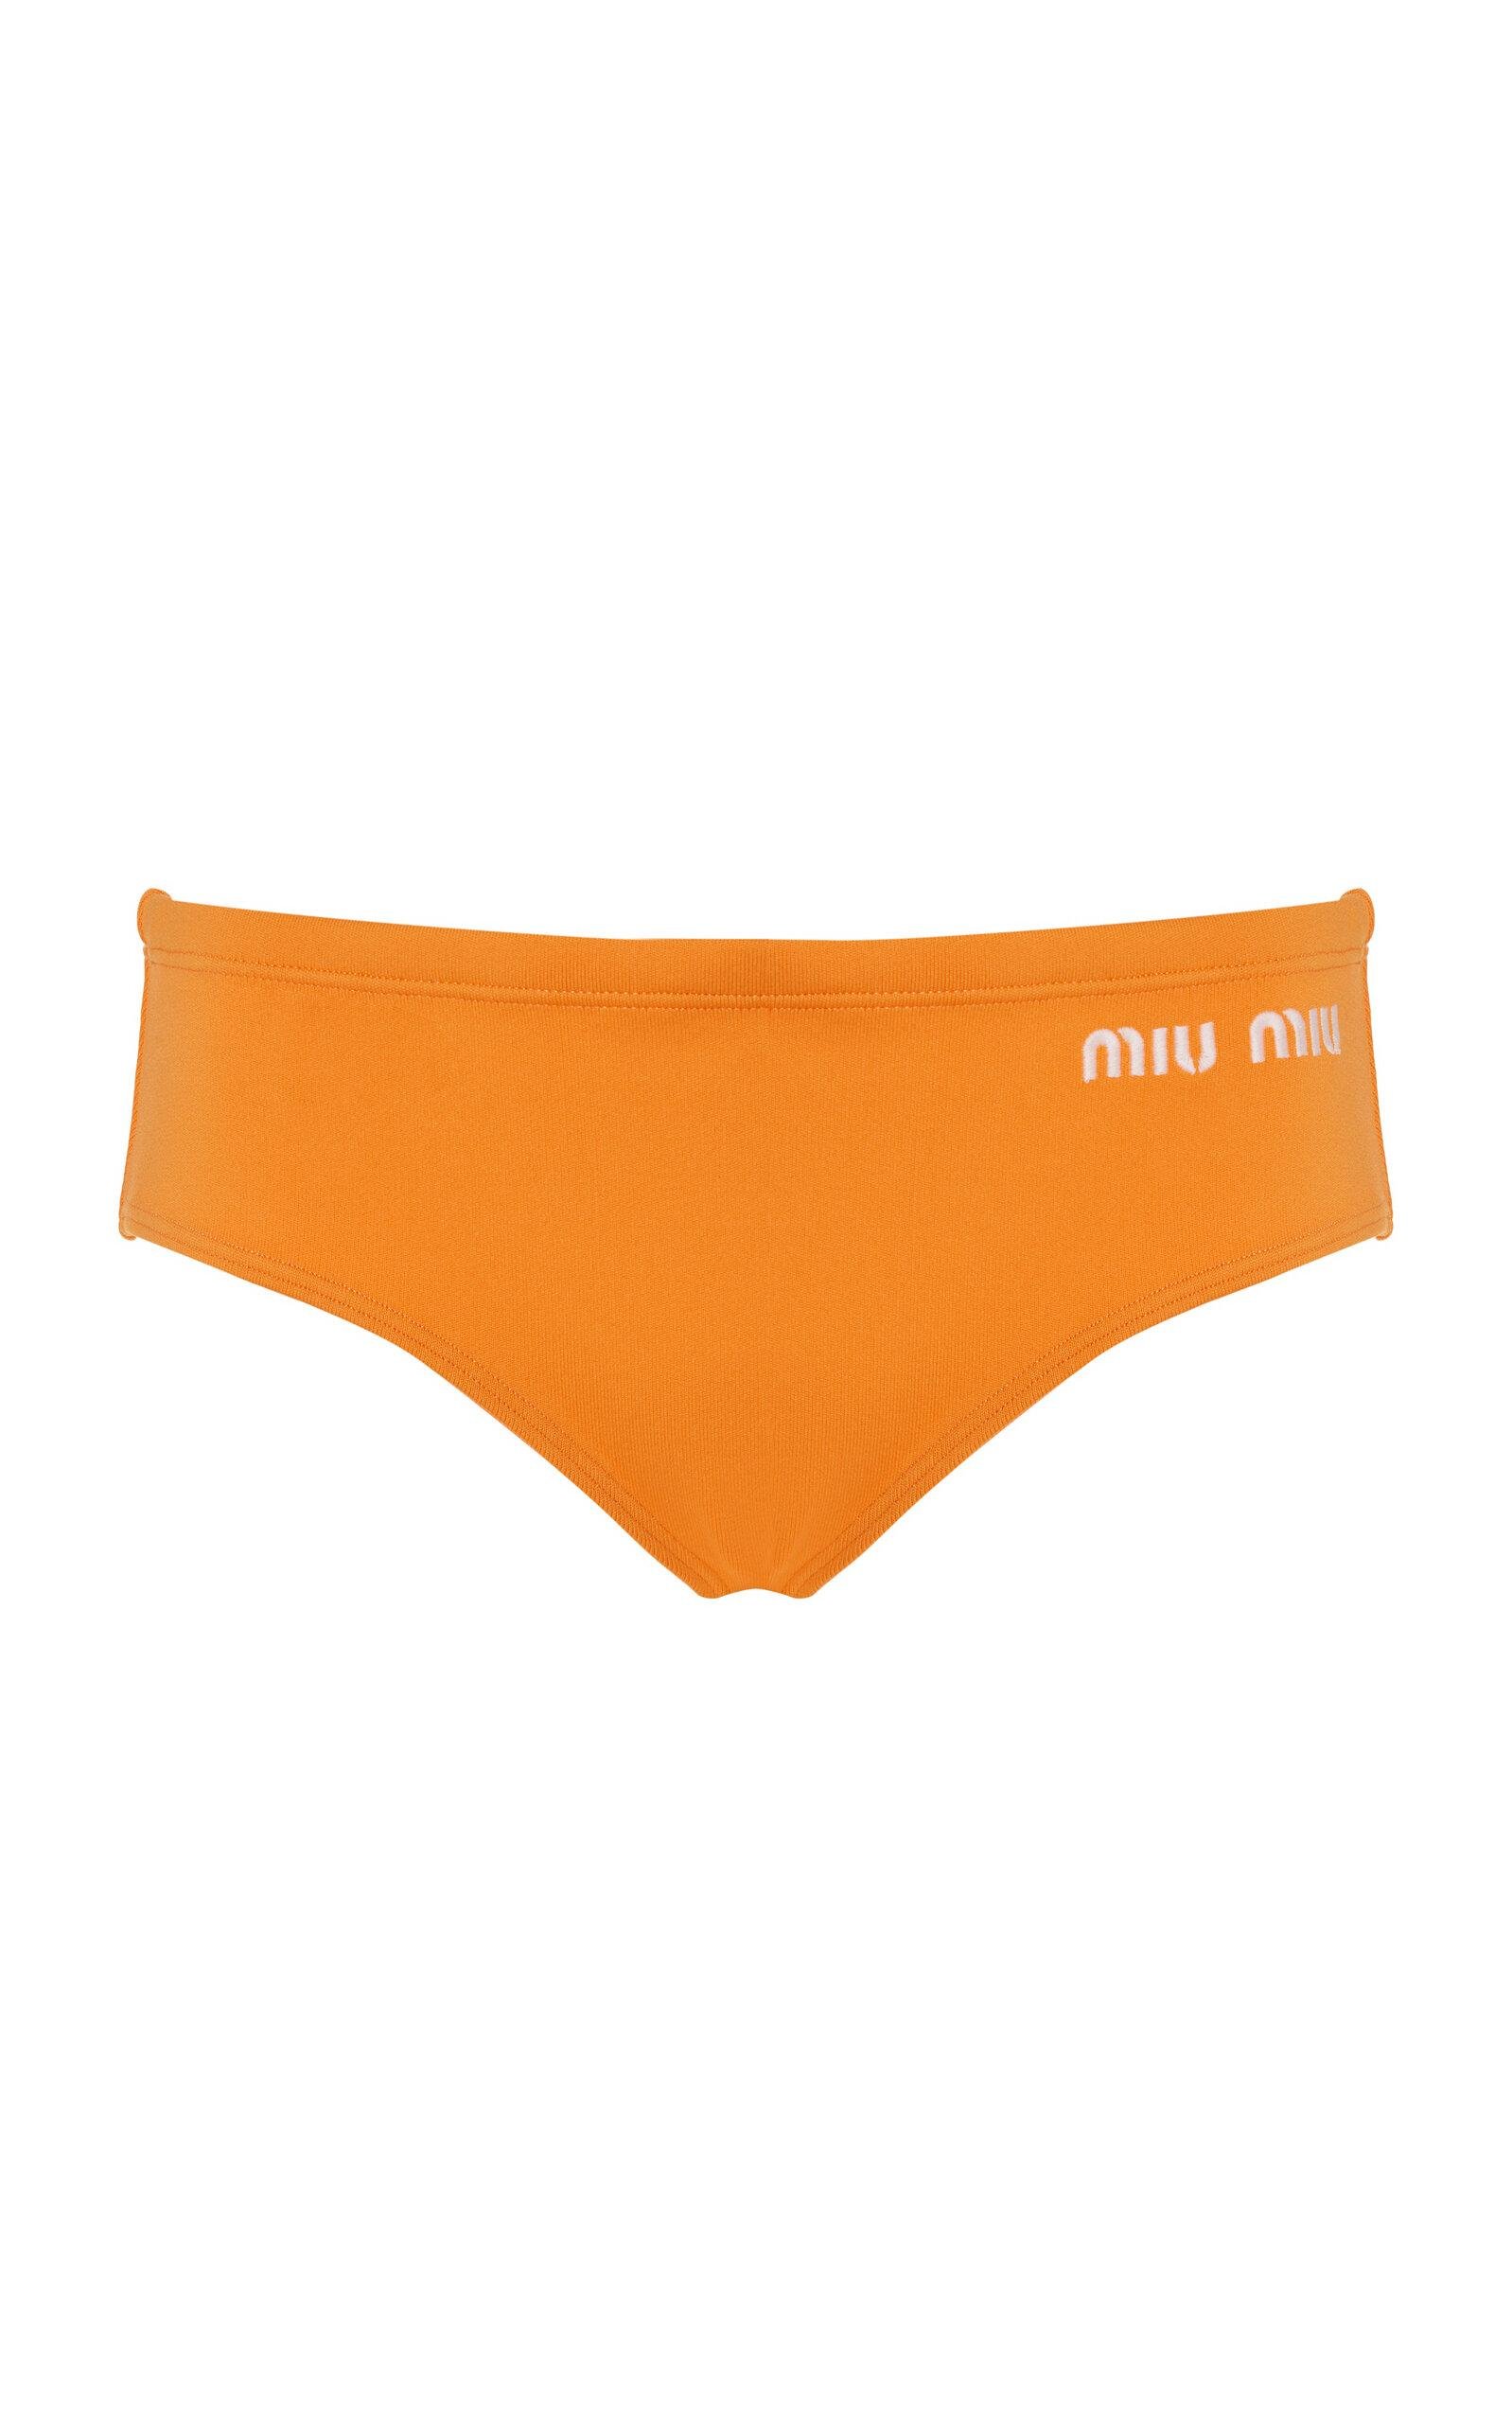 Miu Miu - Logo-Knit Nylon Panties - Orange - IT 40 - Moda Operandi by MIU MIU